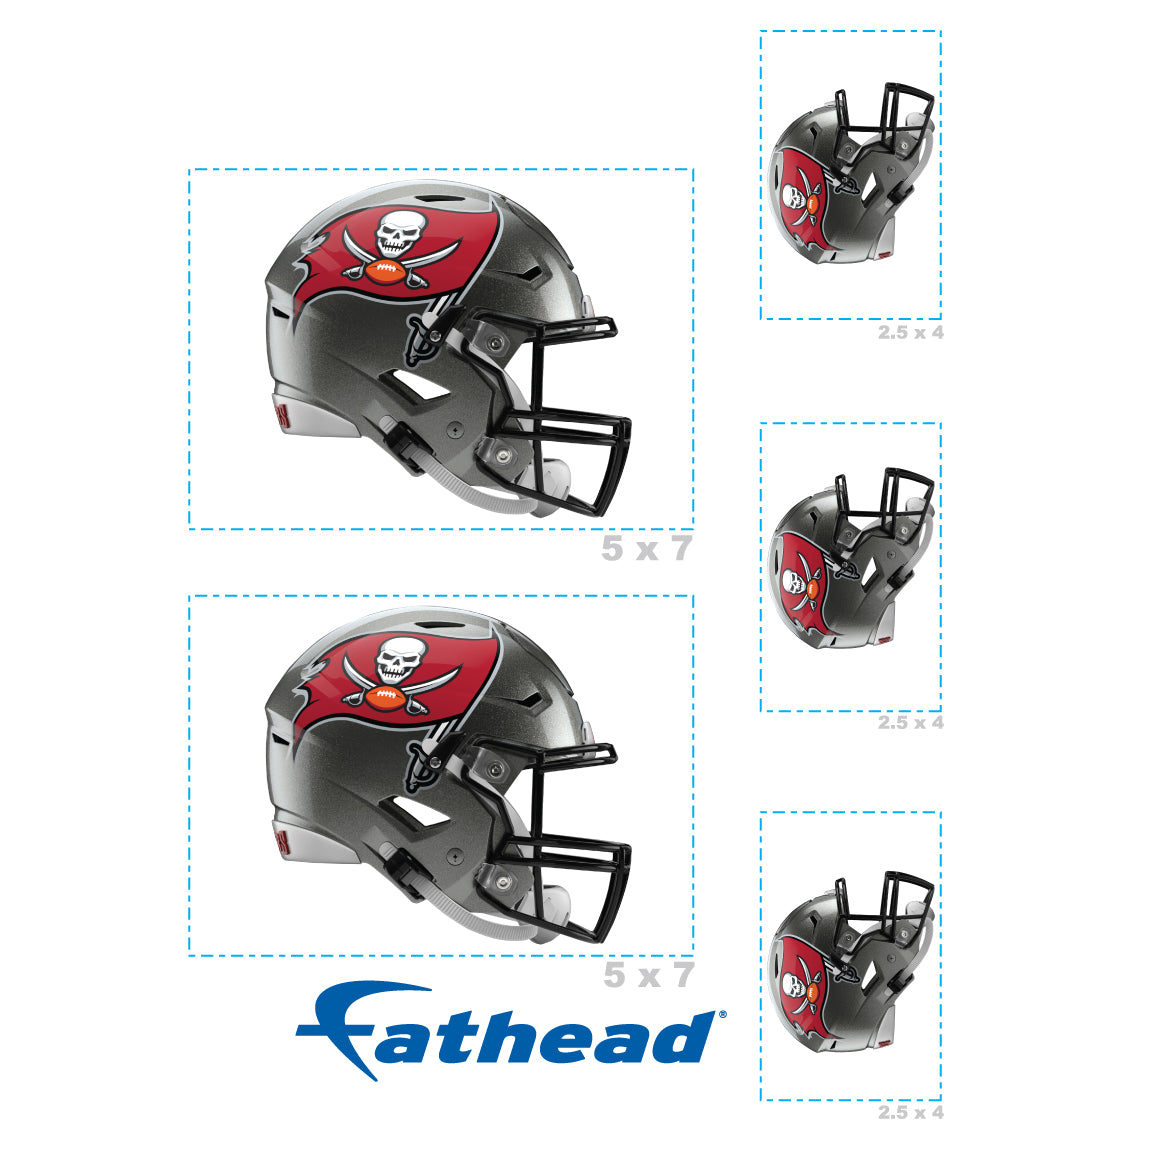 Tampa bay buccaneers helmet minis